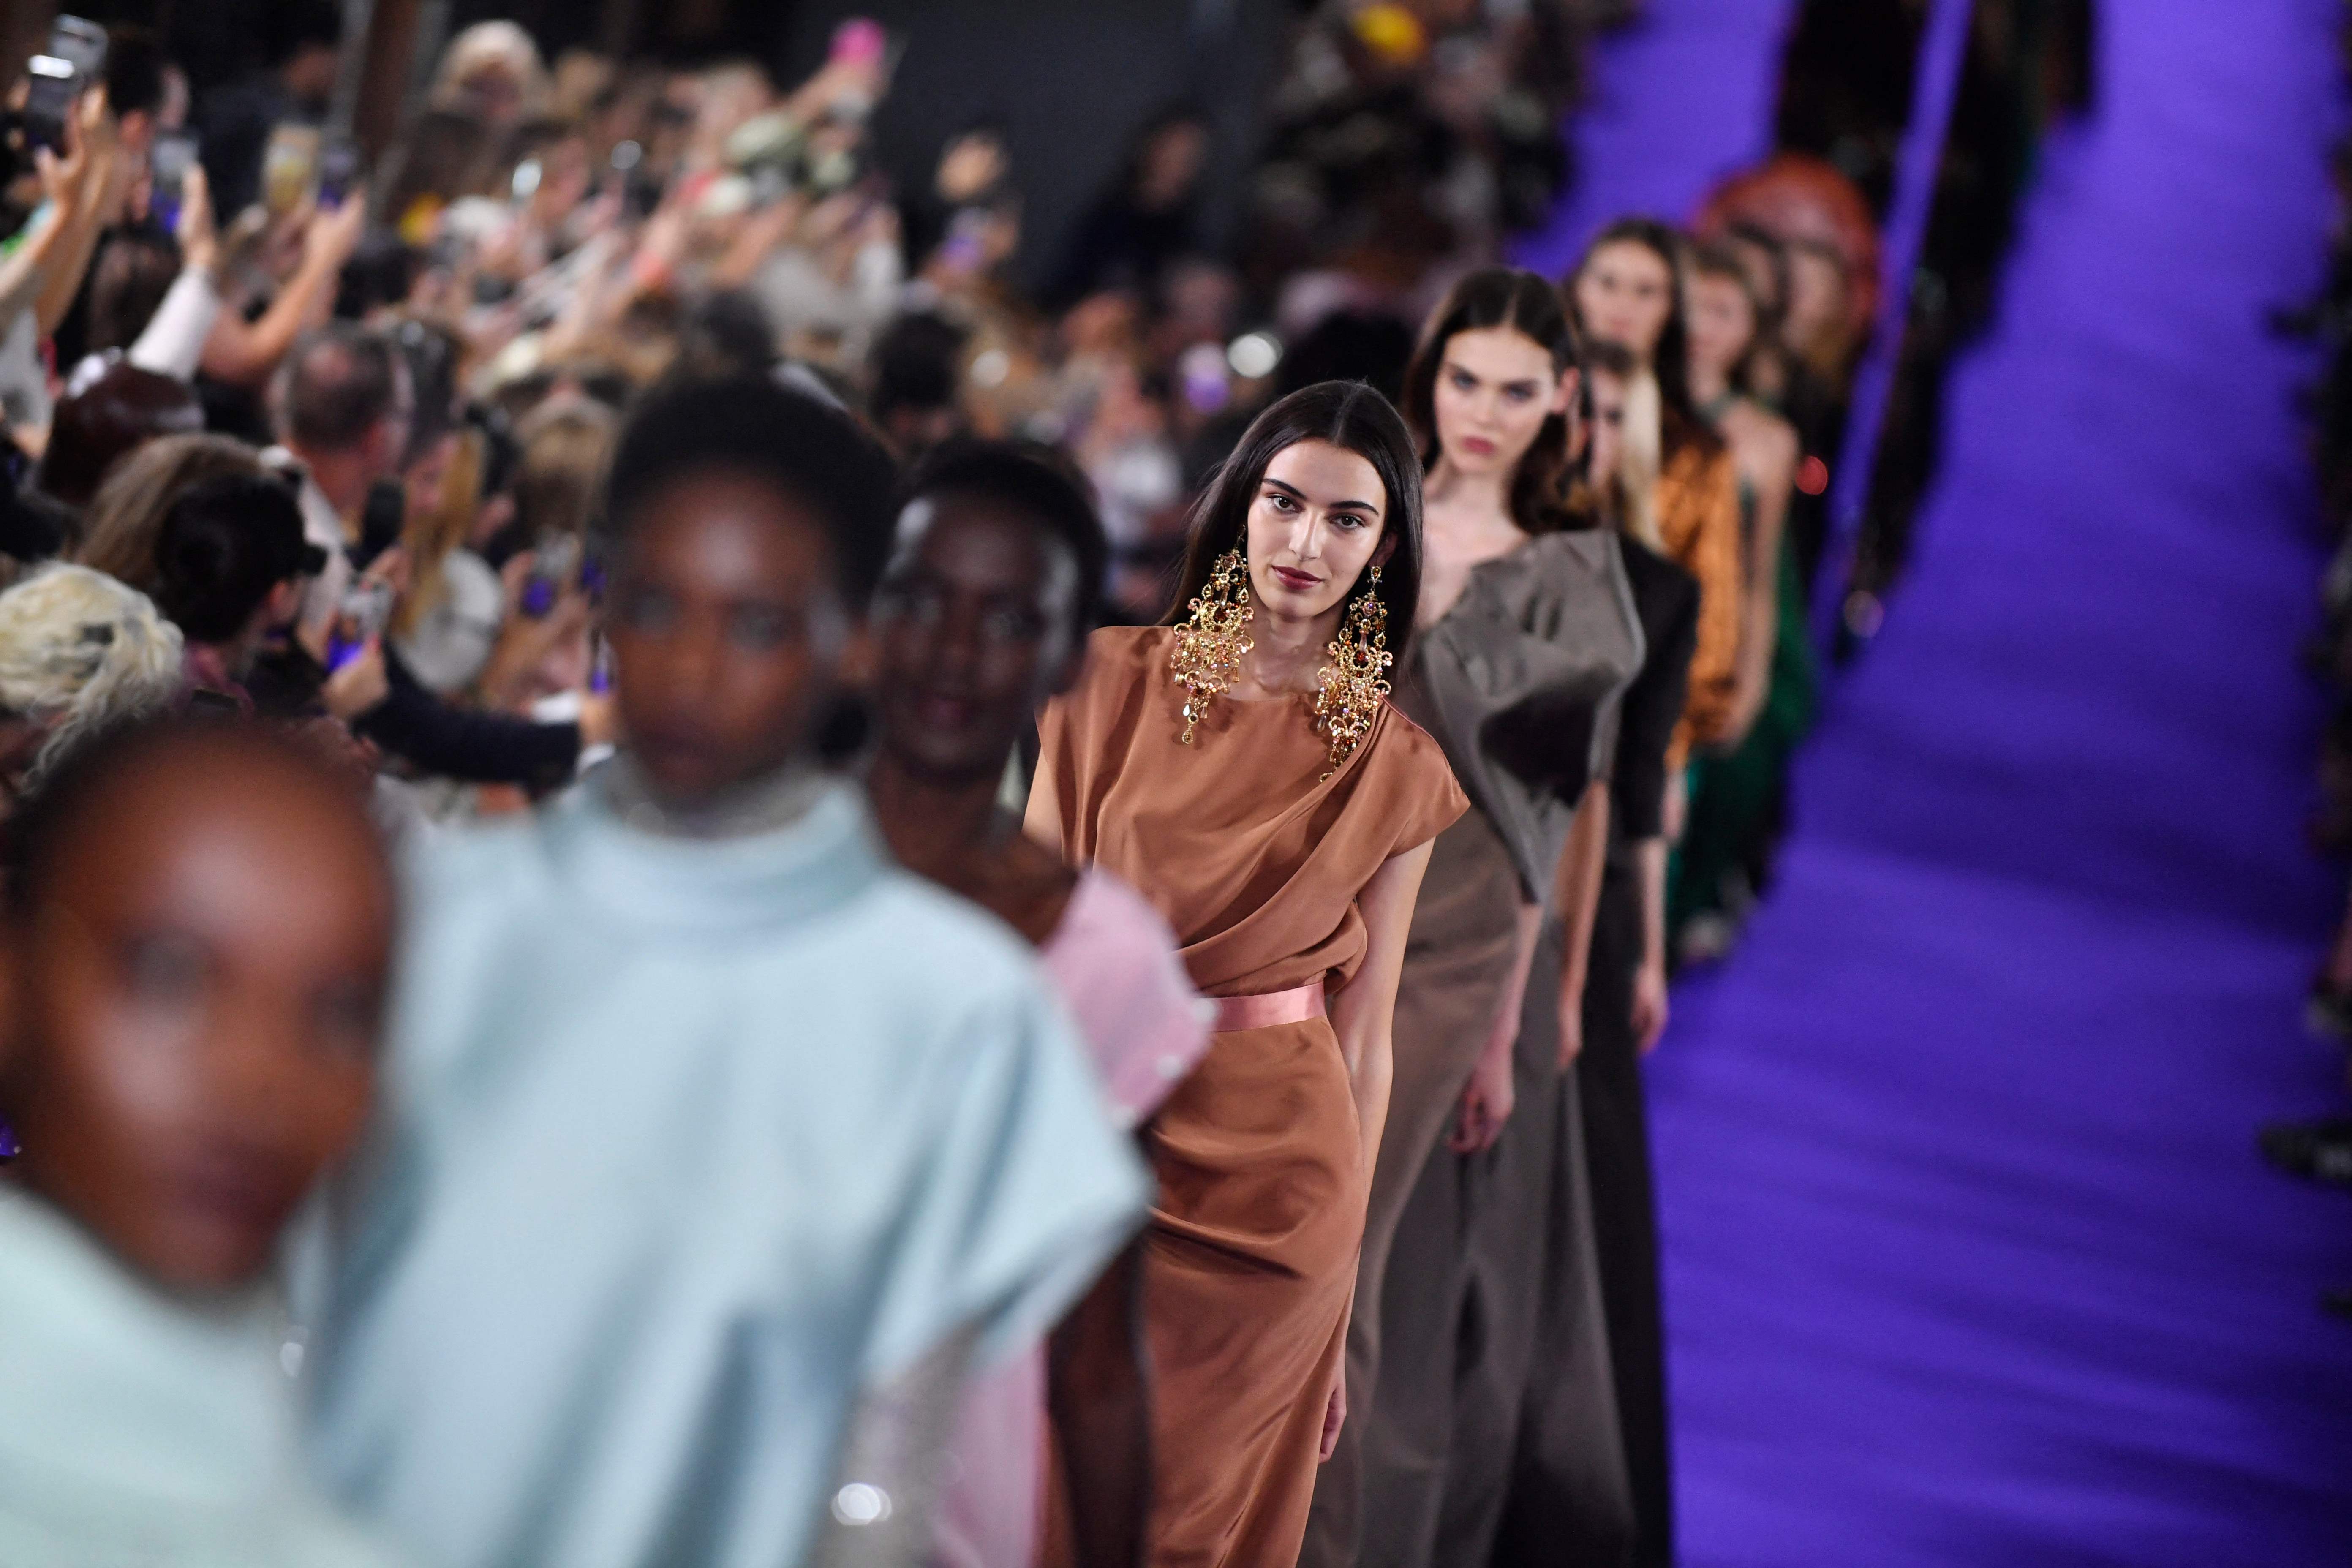 Saudi model Amira Al-Zuhair attends LVMH Prize's cocktail party in Paris